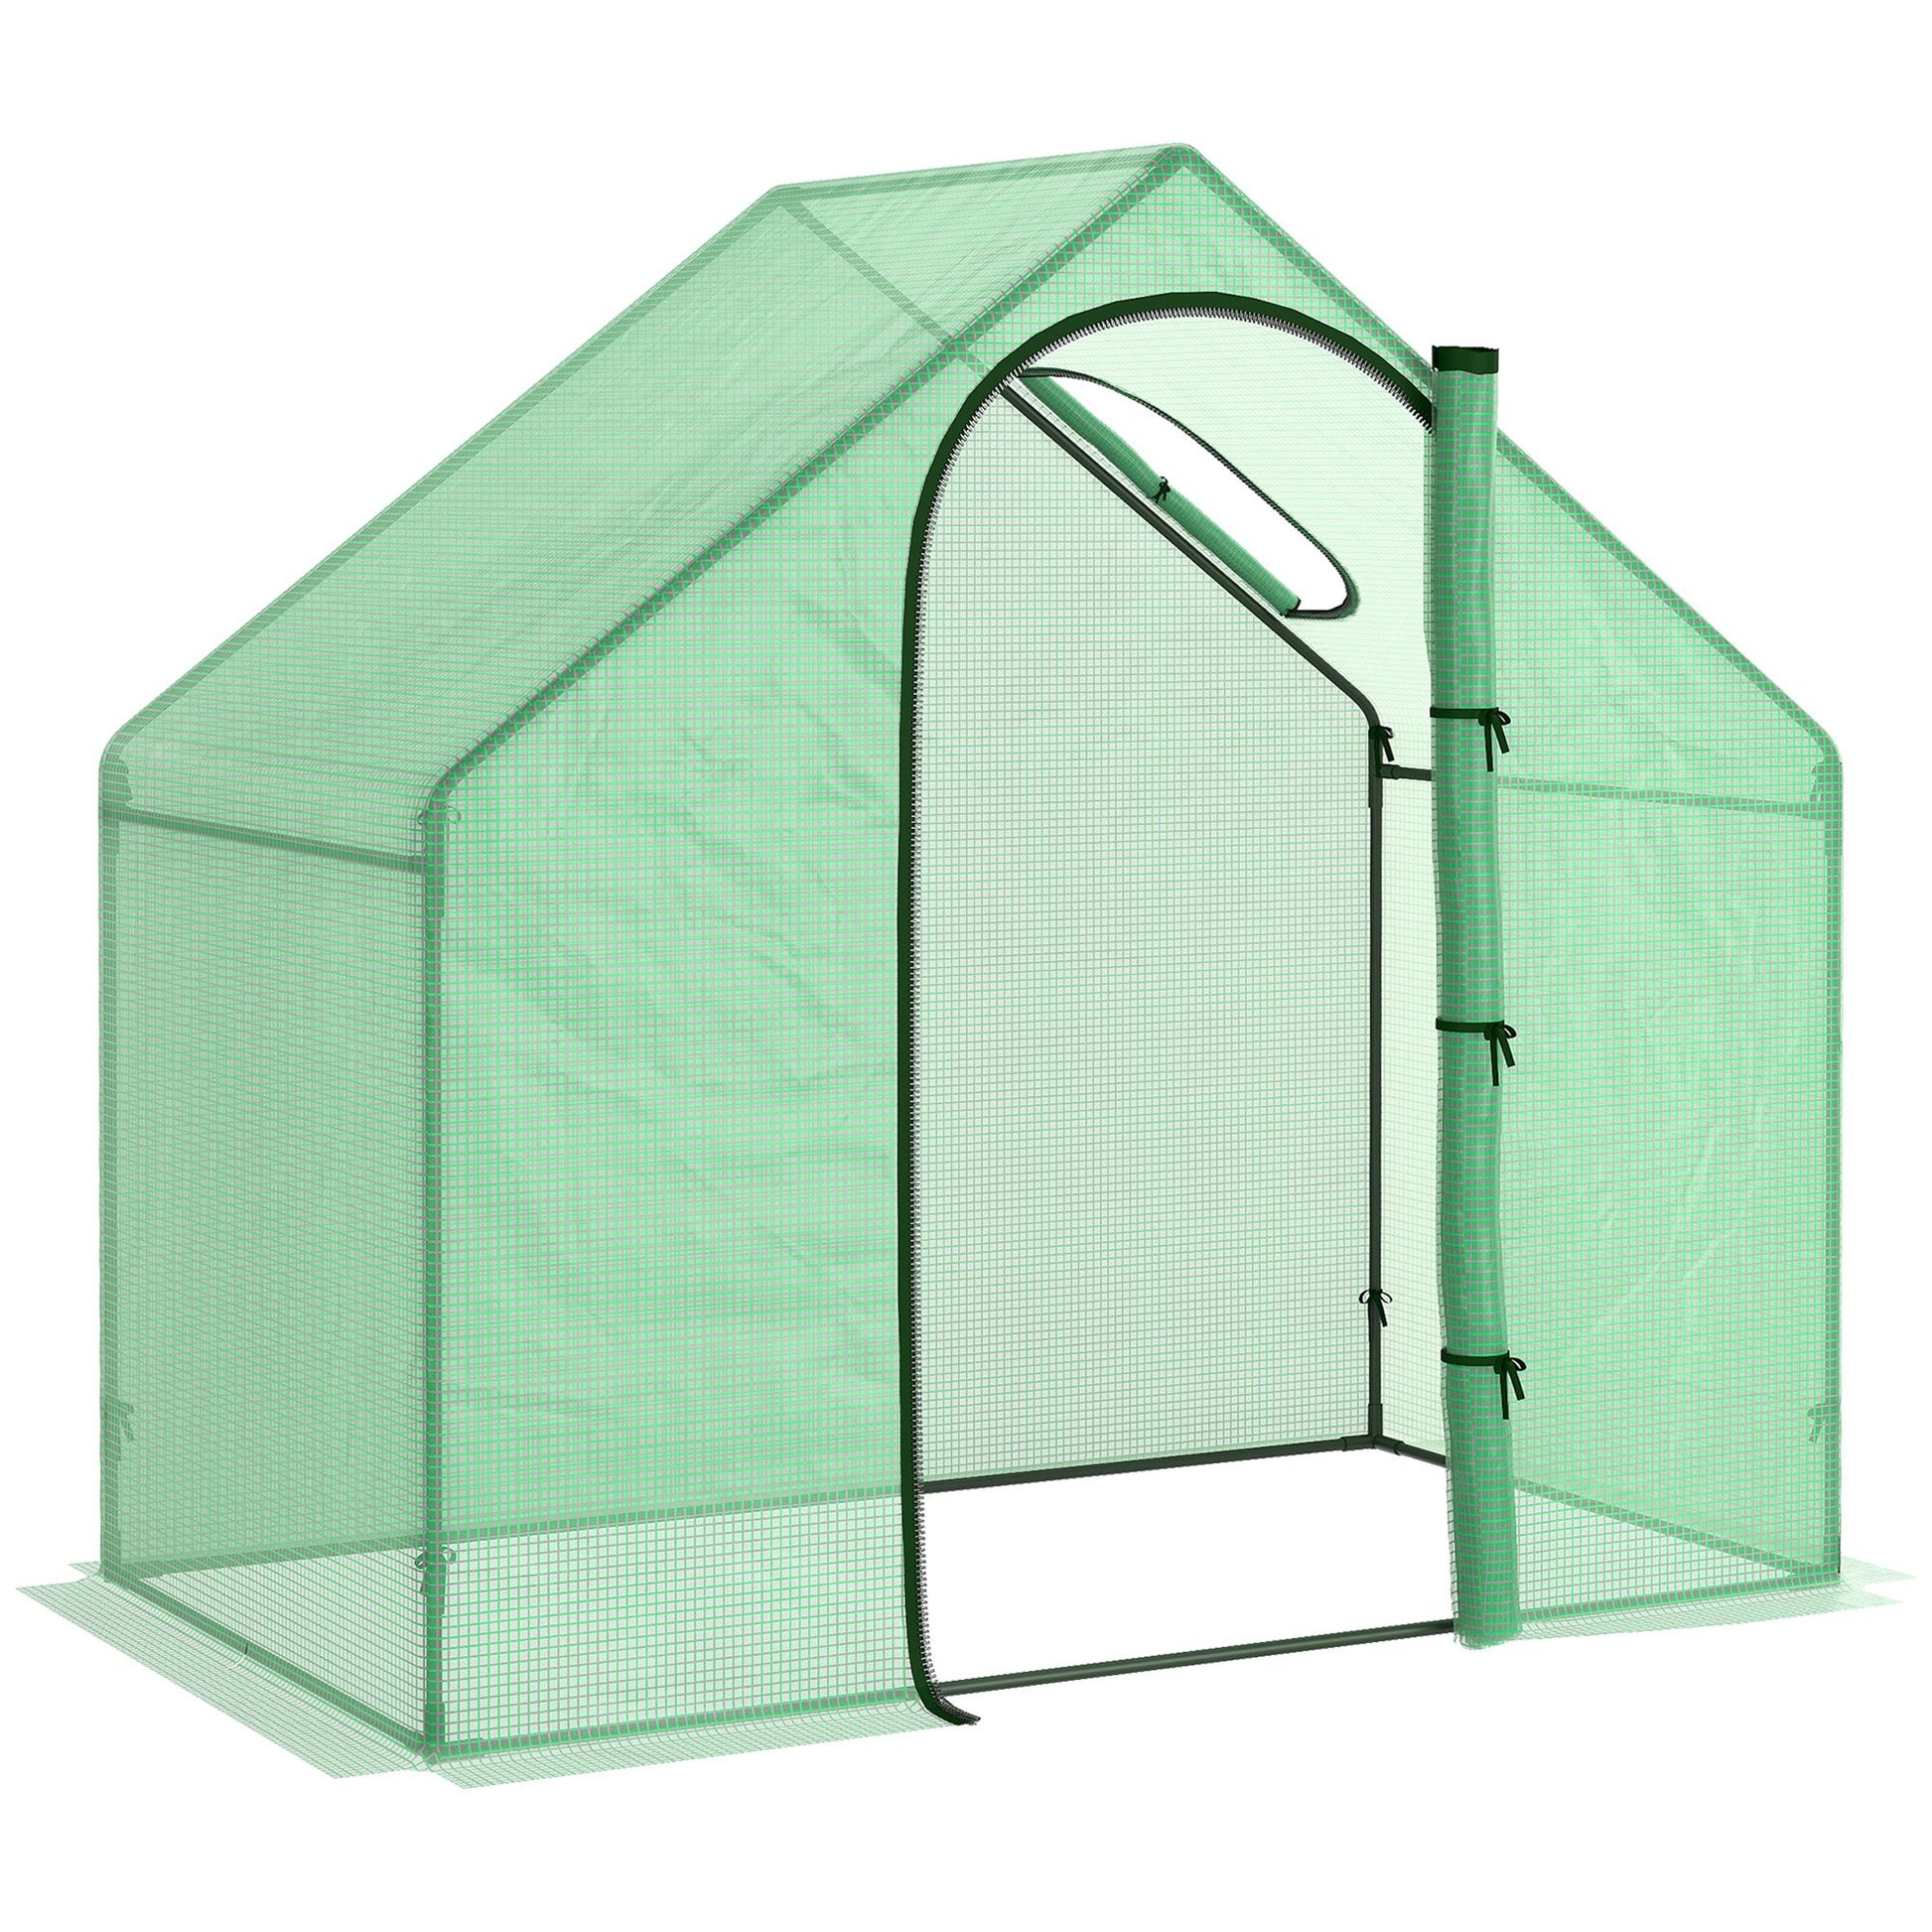 Walk in Greenhouses